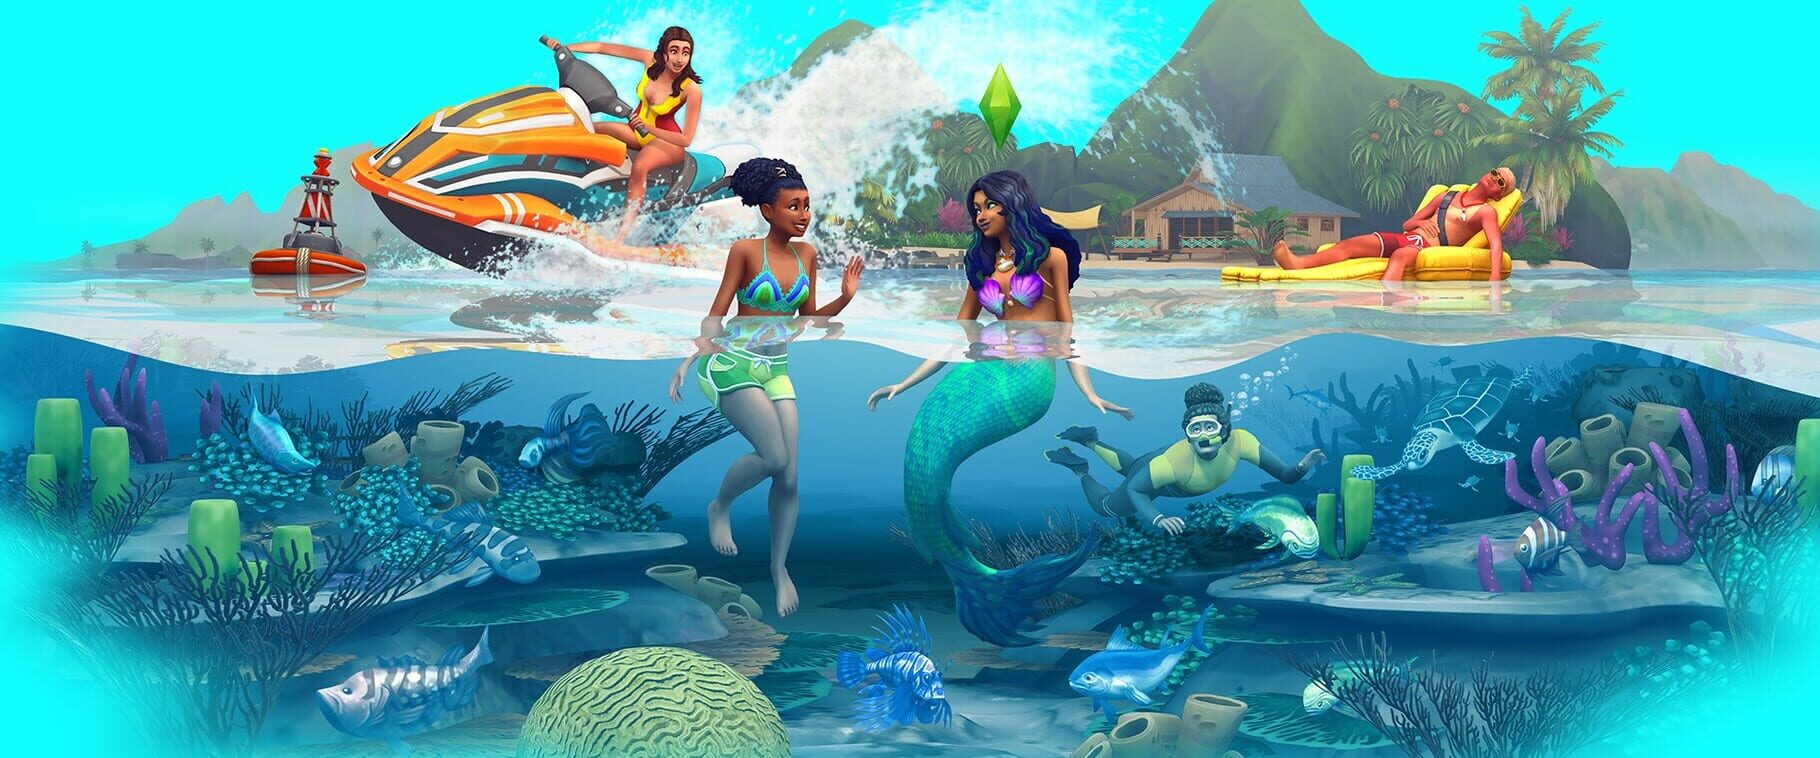 Arte - The Sims 4: Island Living